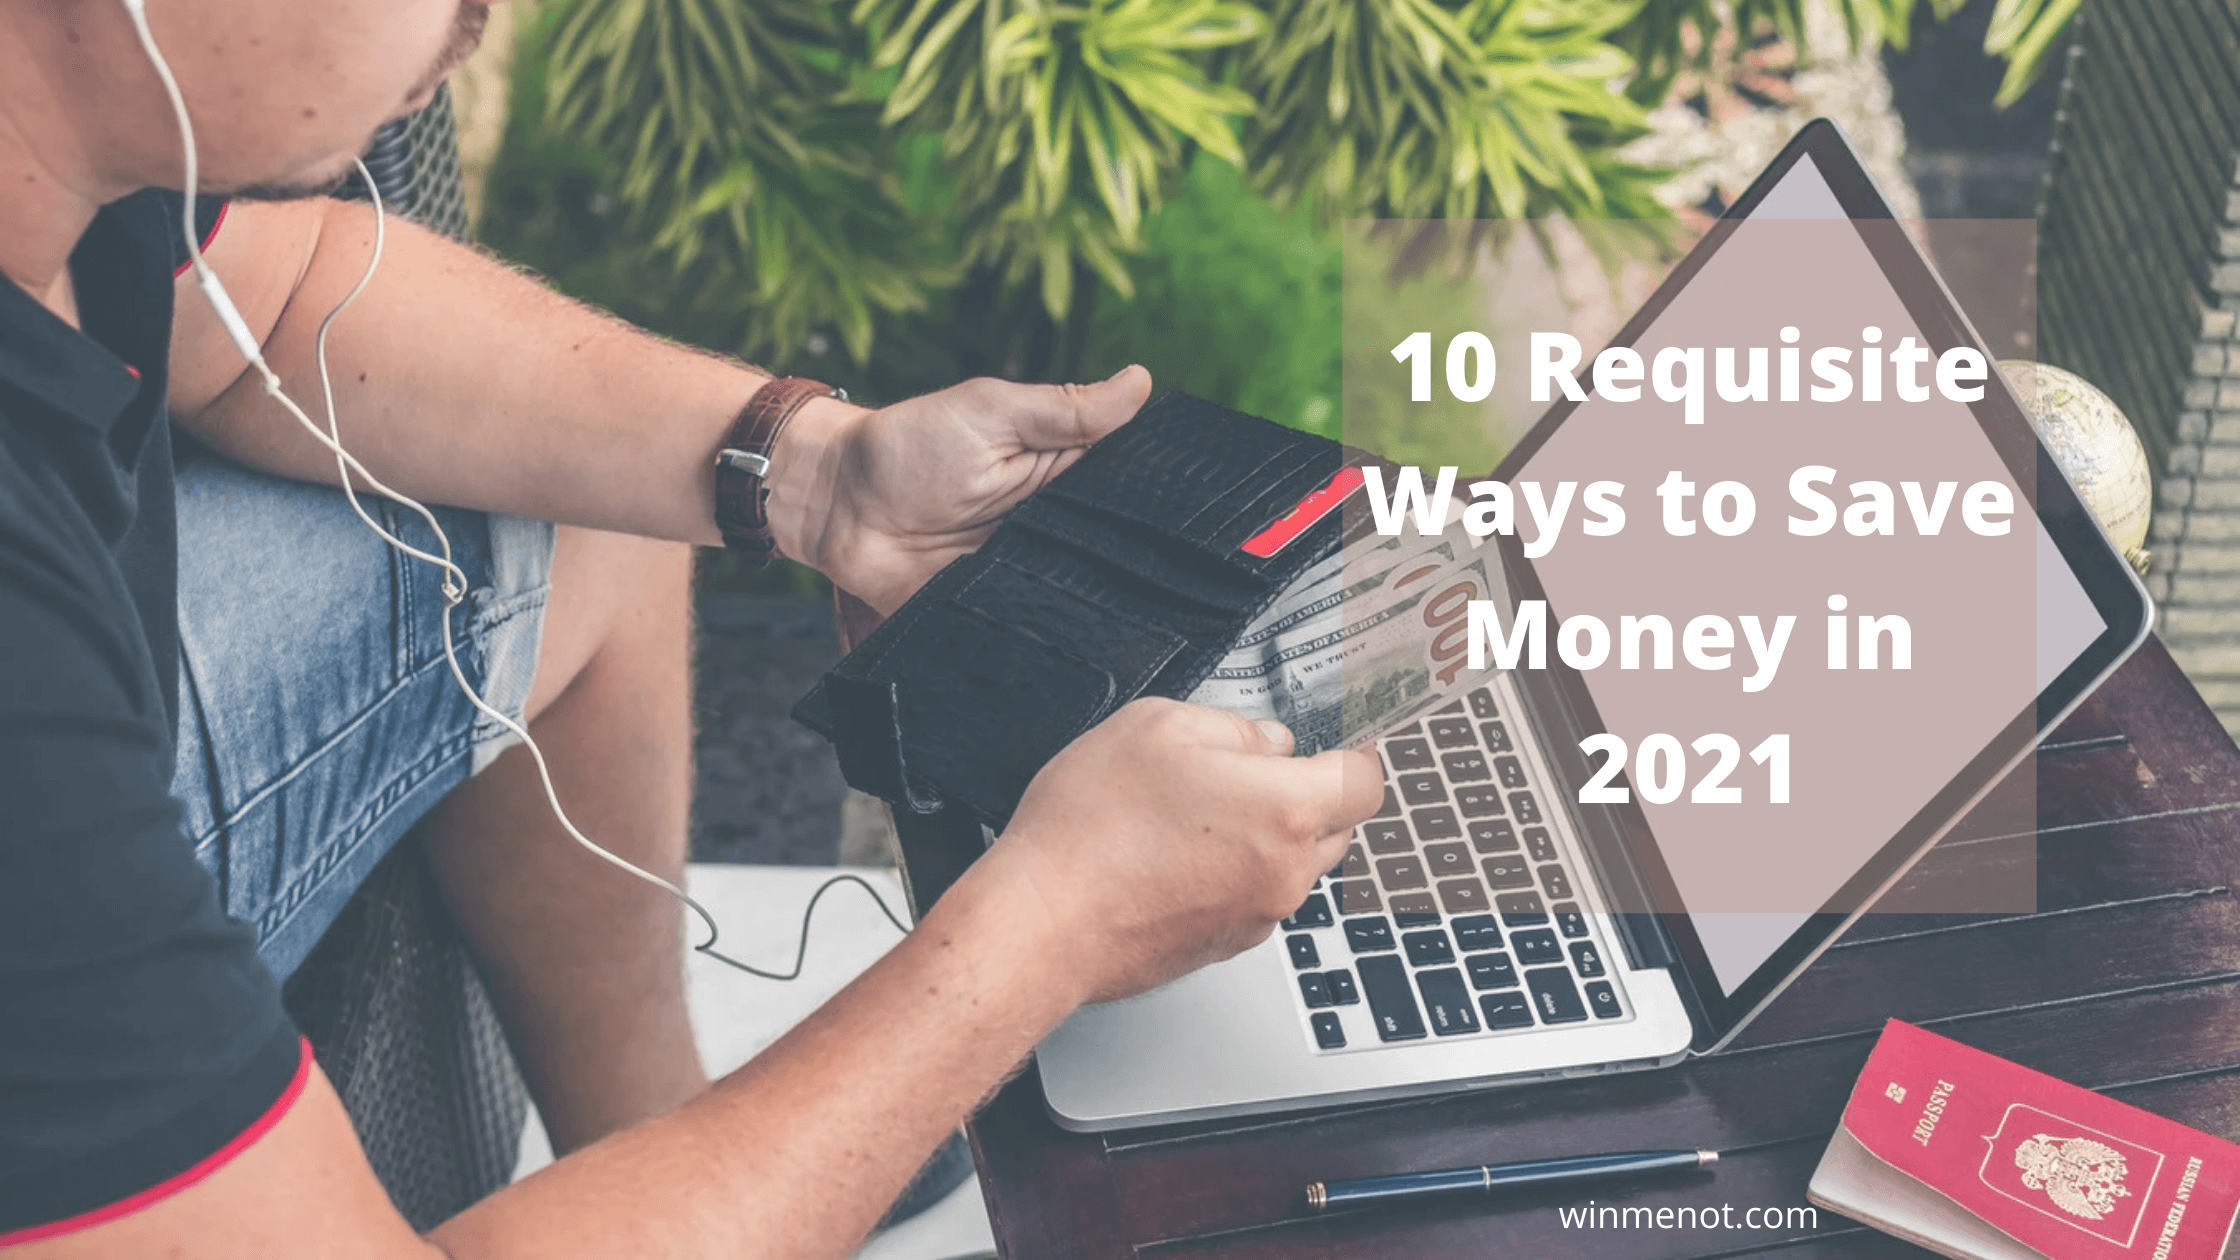 10 Requisite Ways to Save Money in 2021